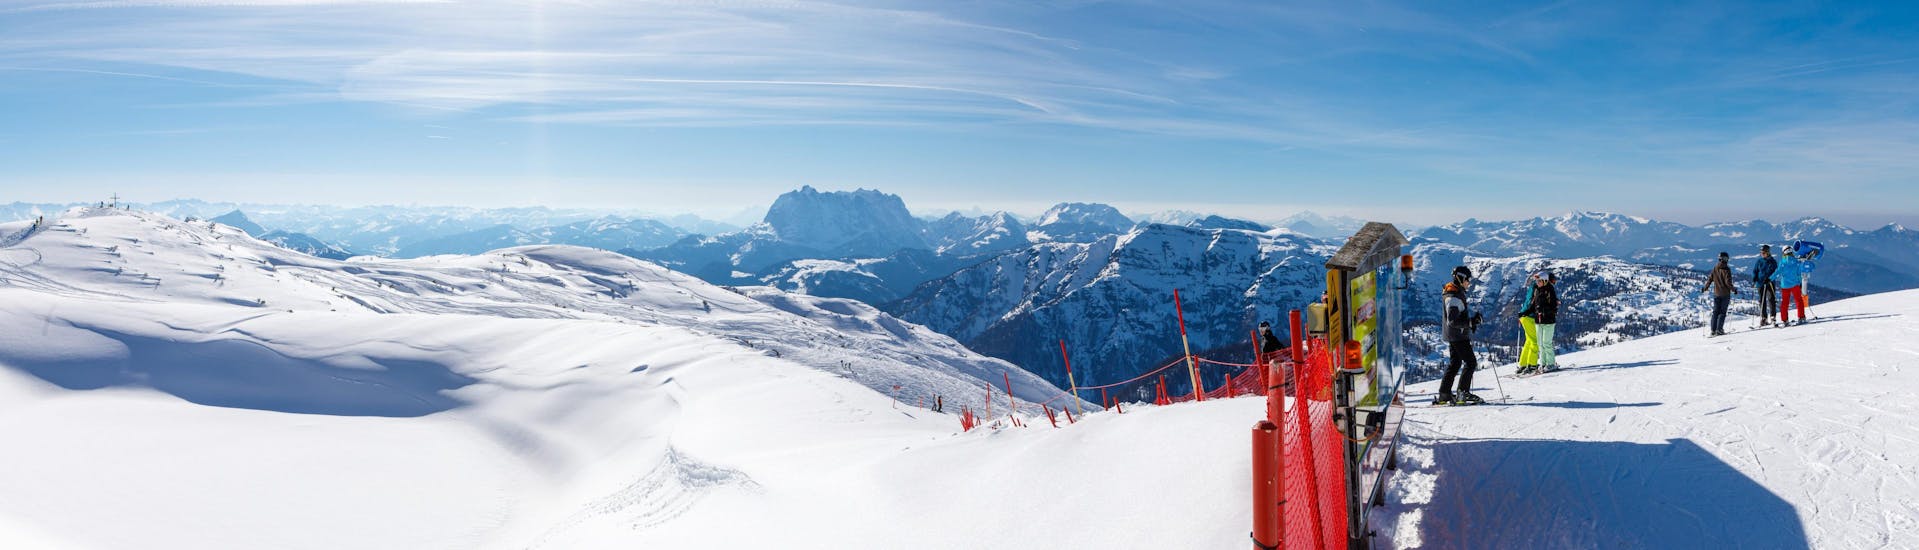 View of the mountains of the ski resort in Elm where ski school teach ski lessons. 